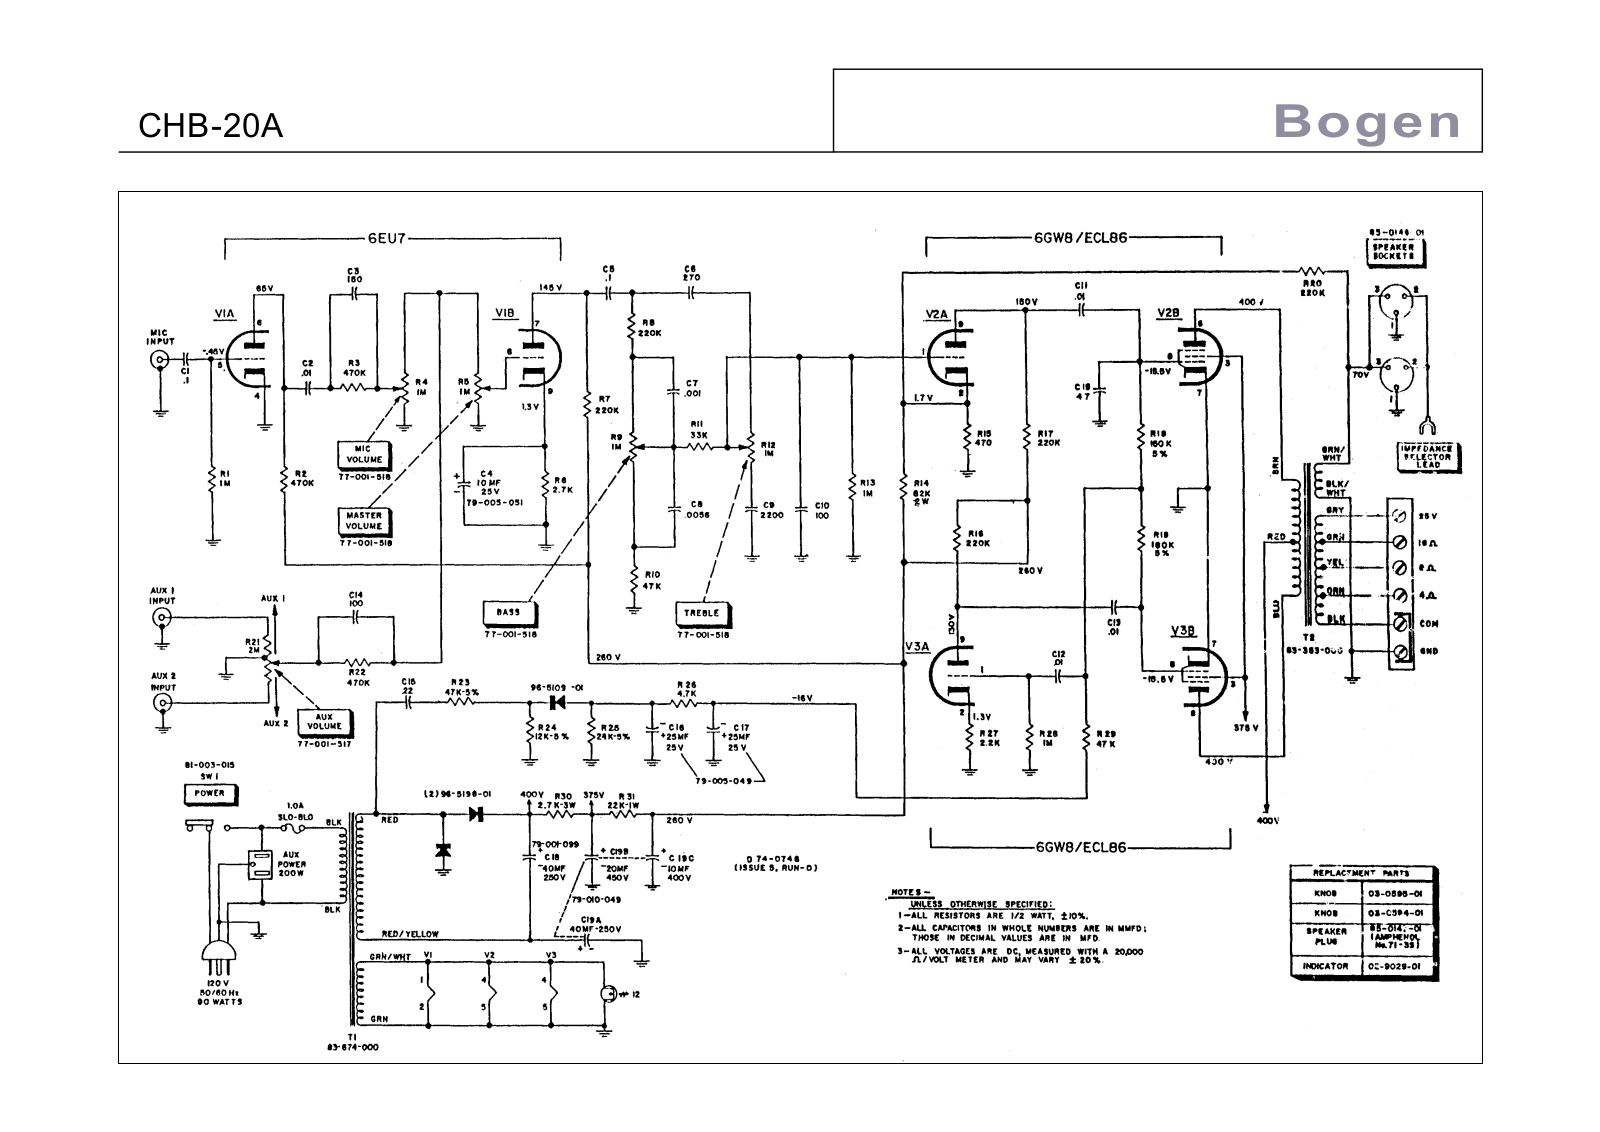 Bogen chb 20a schematic